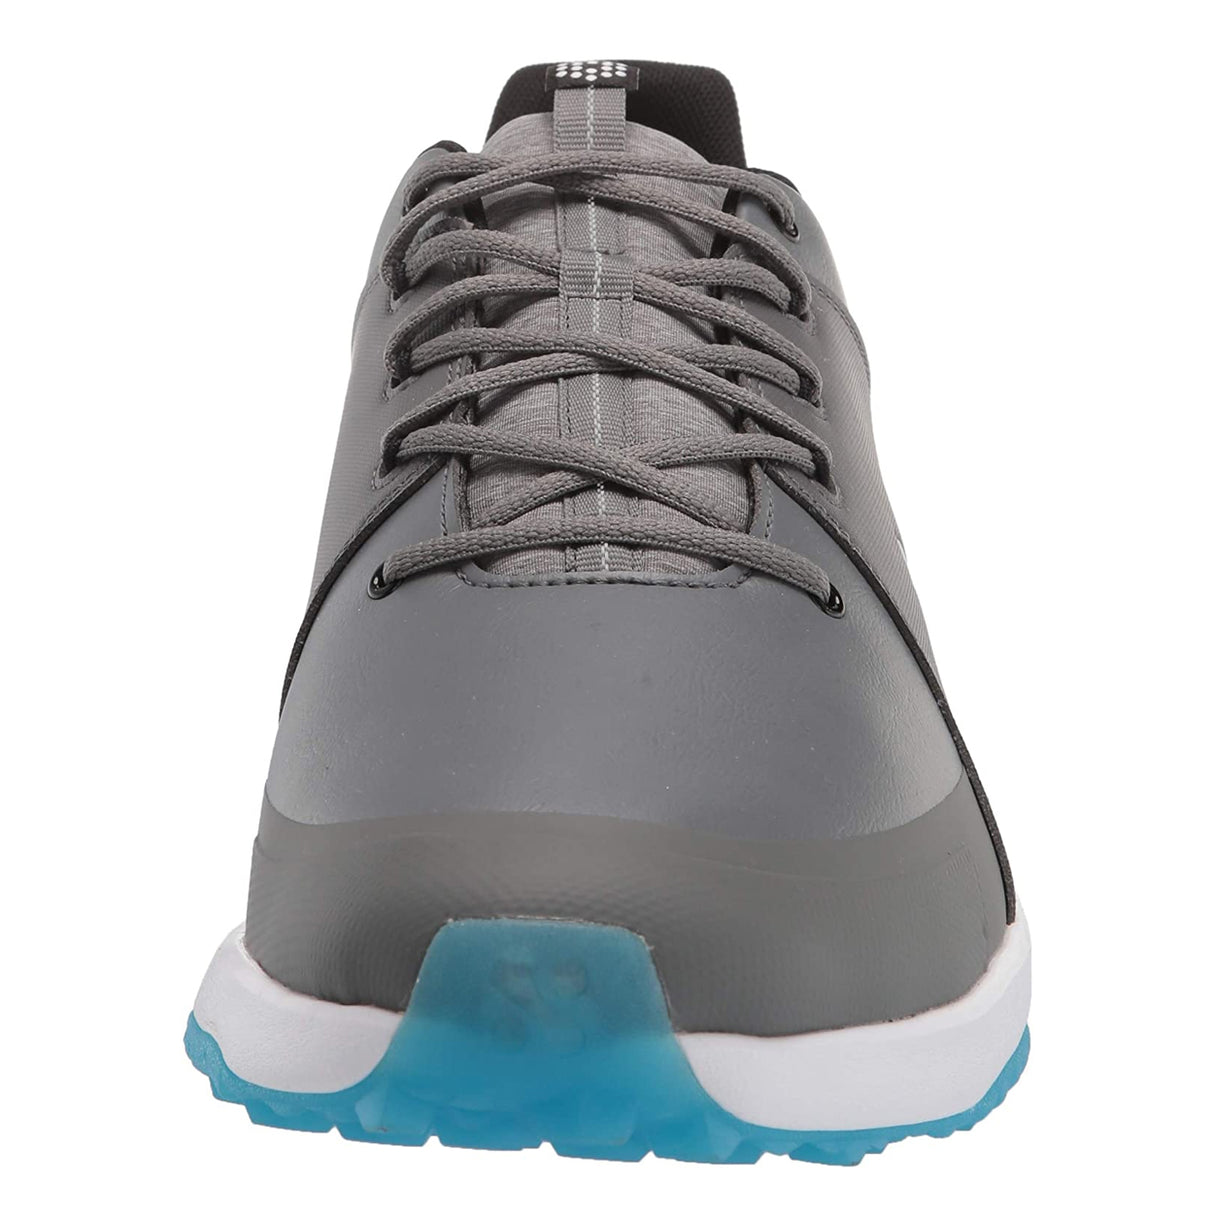 PUMA Grip Fusion Pro 3.0 Spikeless Waterproof Golf Shoes